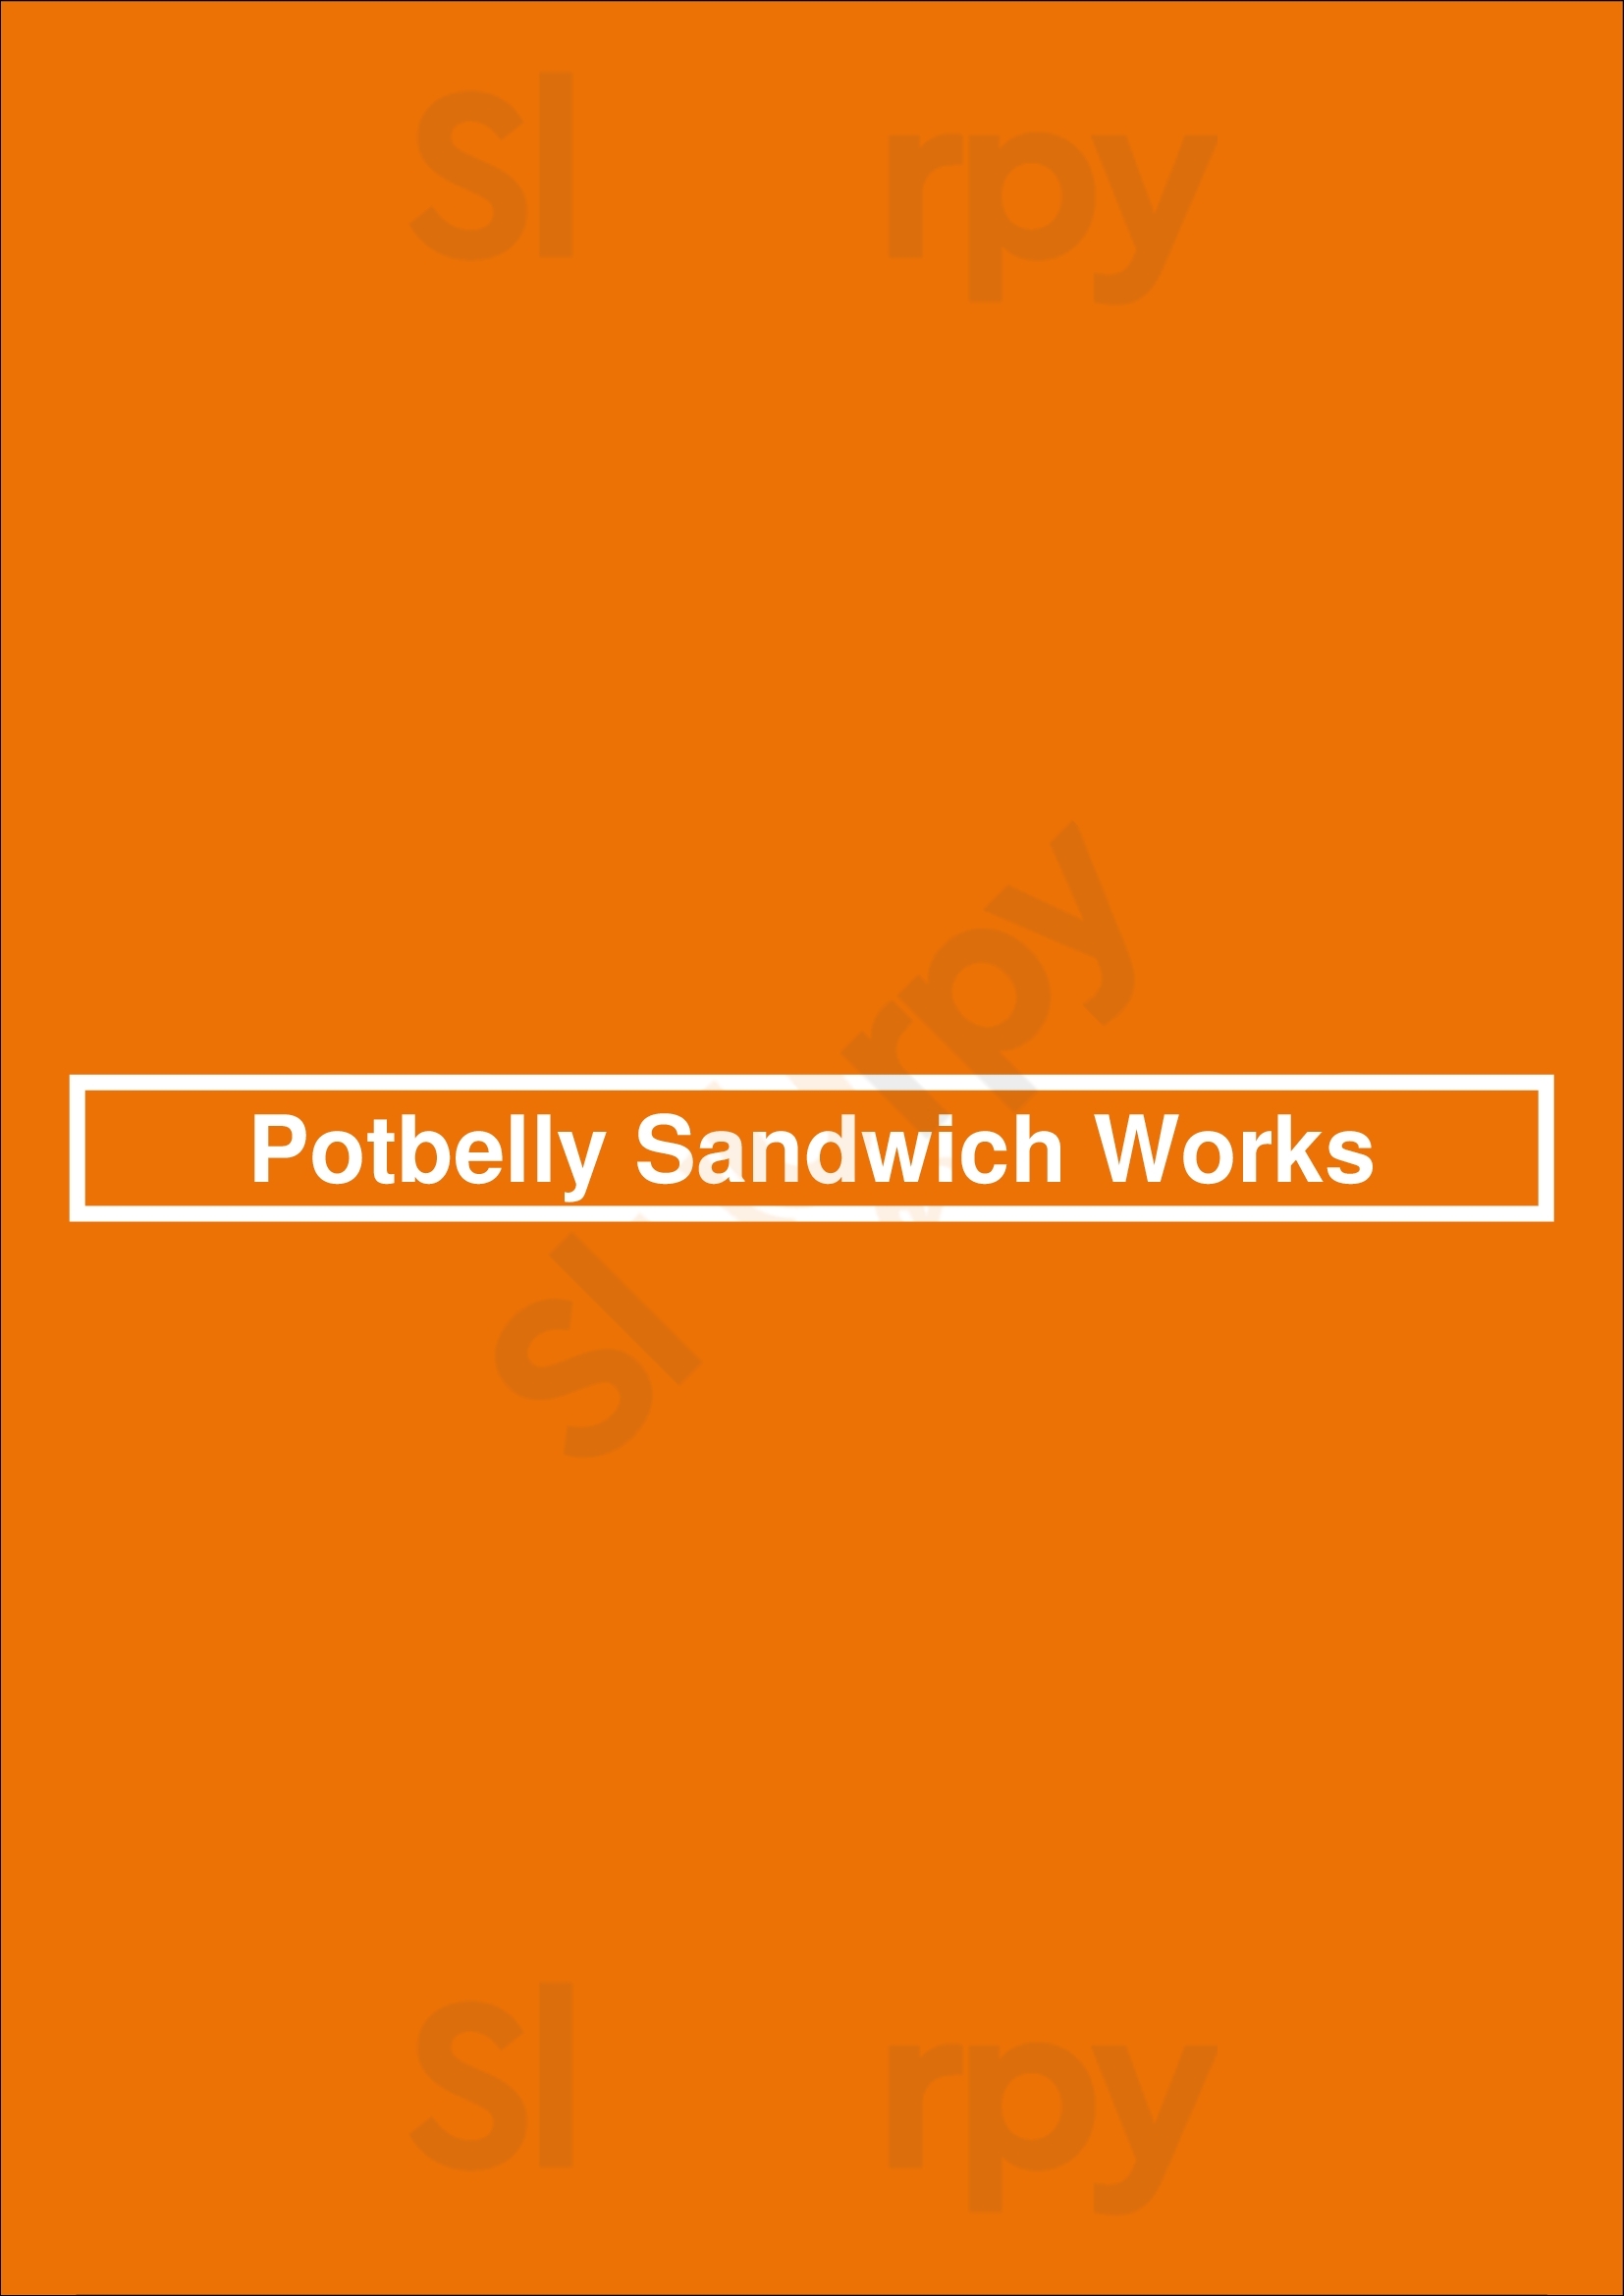 Potbelly Sandwich Shop Denver Menu - 1